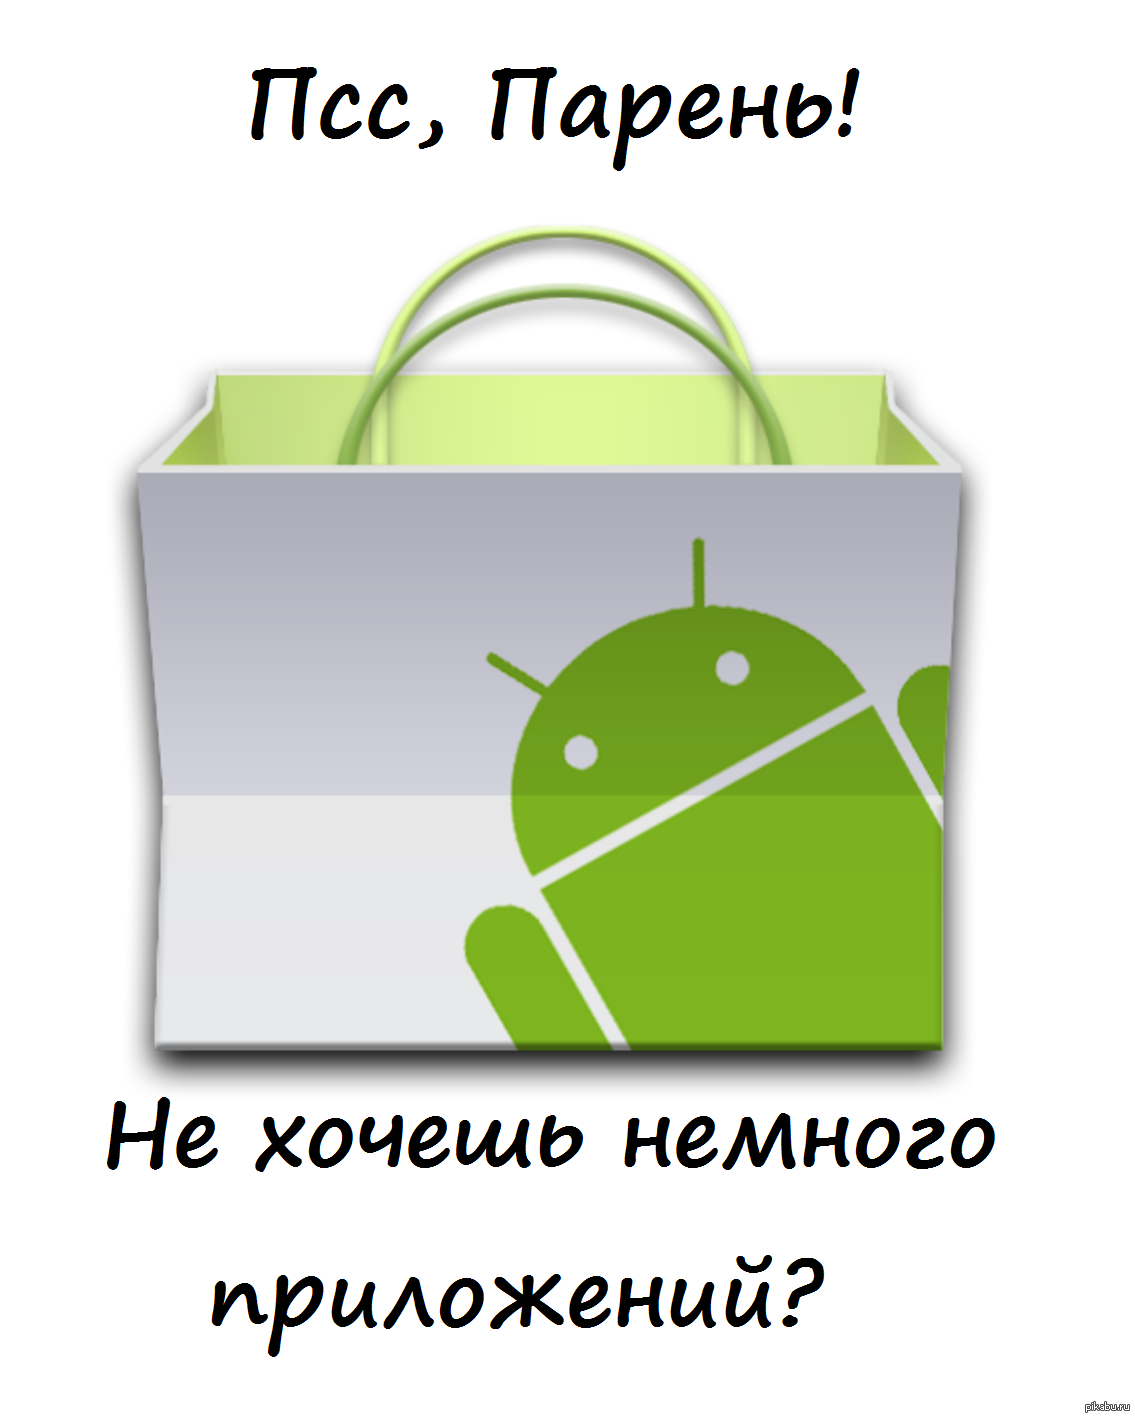 Андроид 4.0 маркет. Android Market. Плей Маркет значок. Логотип андроид. Плей Маркет значок на андроиде.